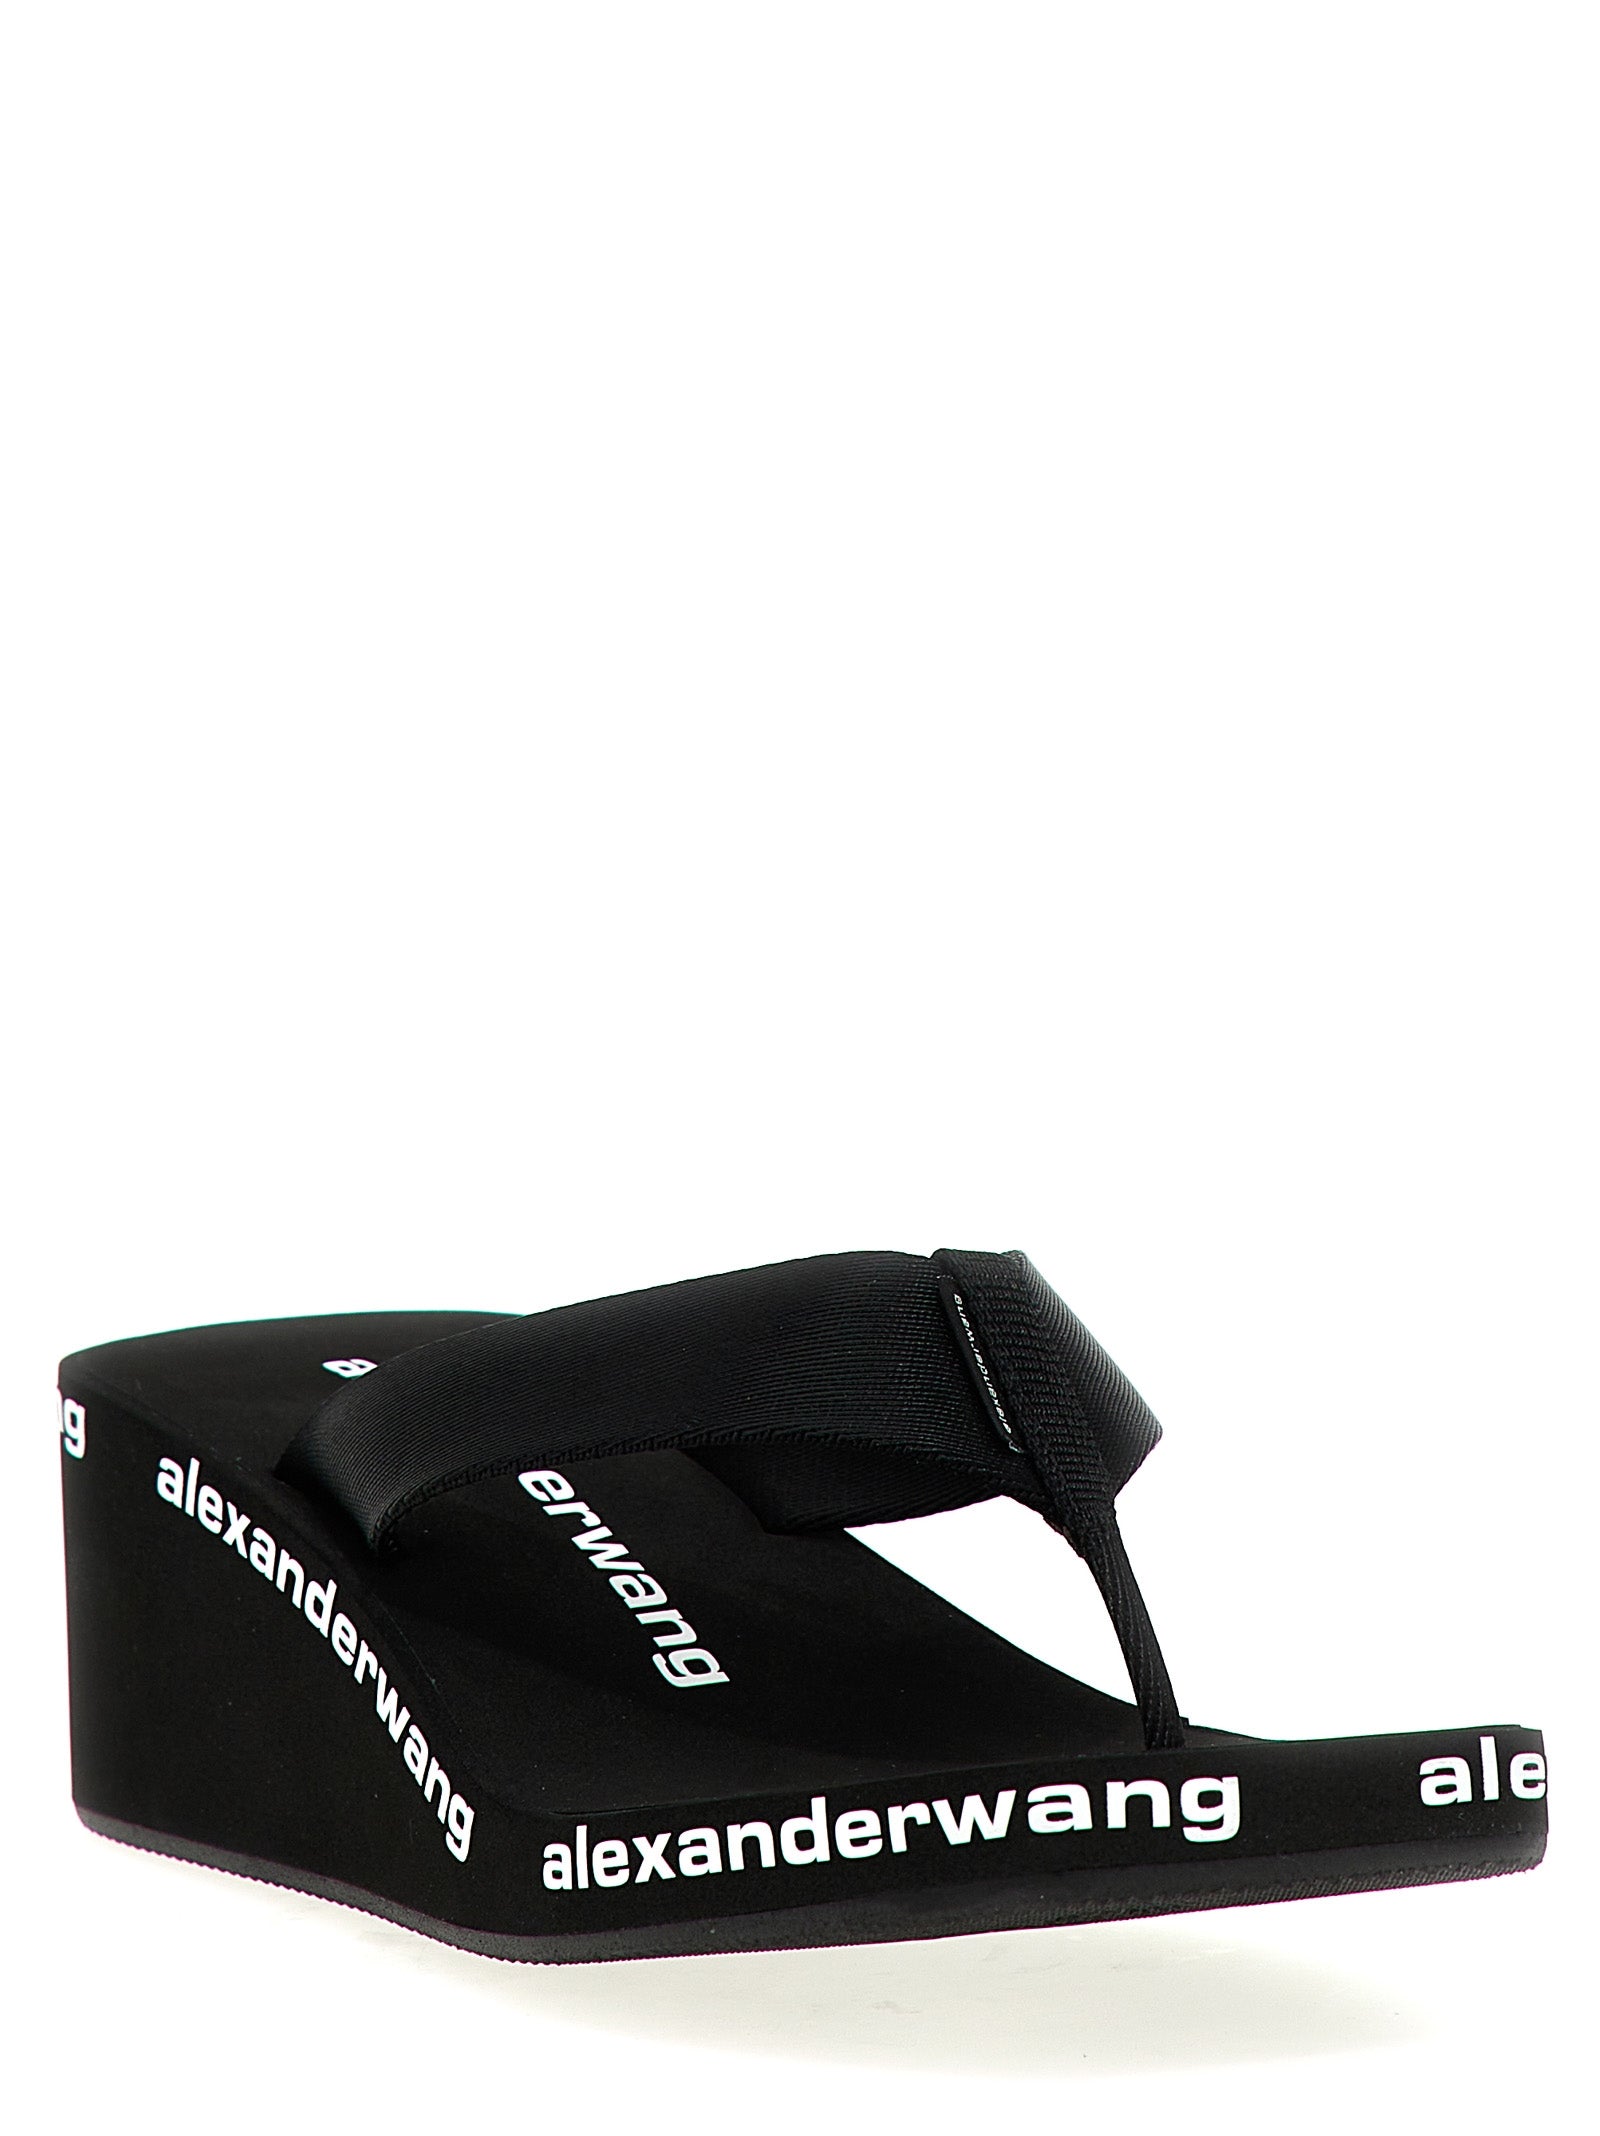 Shop Alexander Wang Wedge Flip Flop Sandals Black